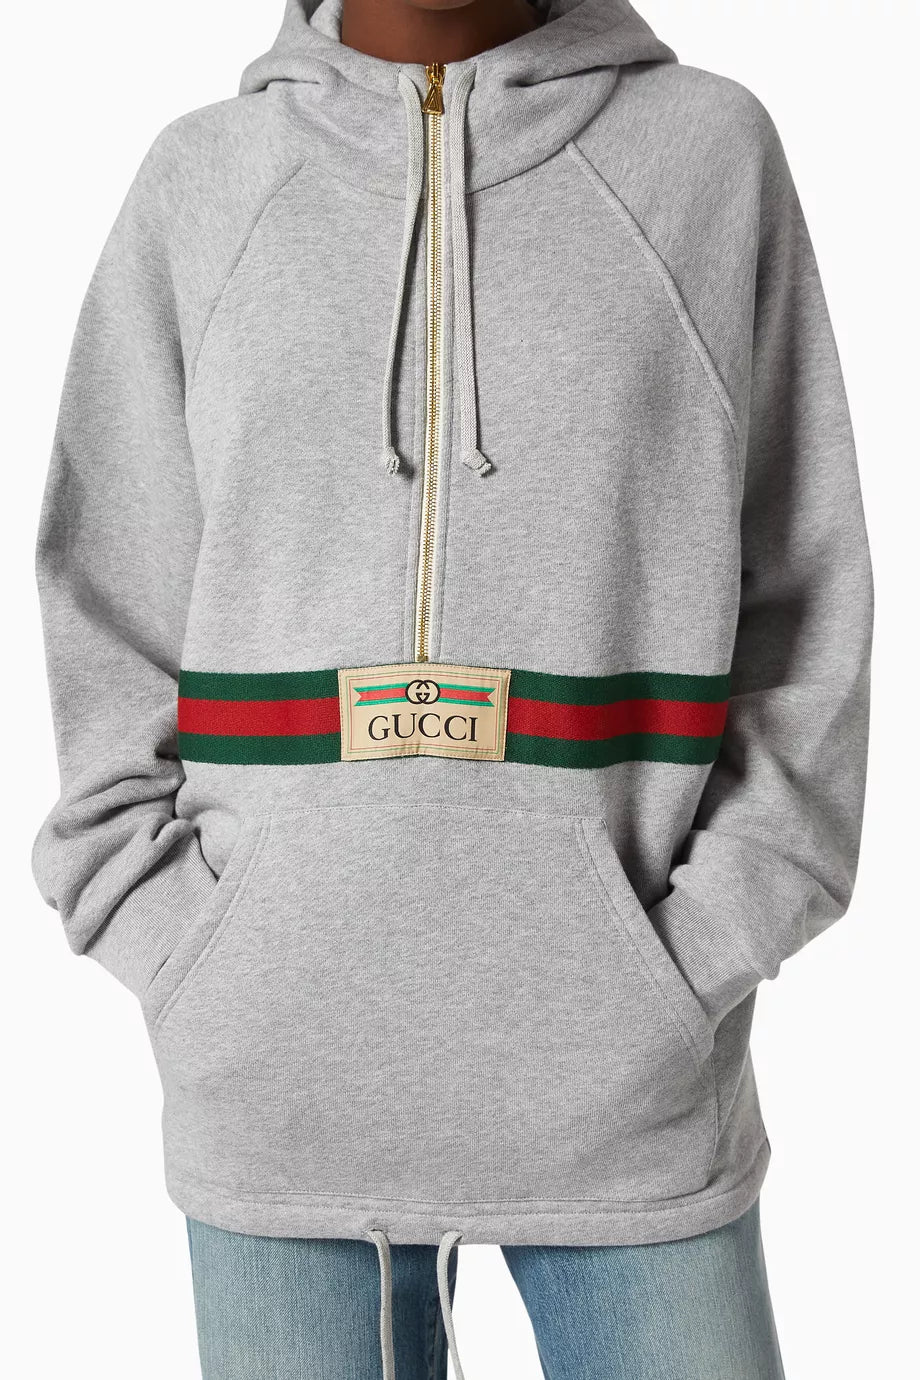 Gucci Gray Sweatshirt with Gucci Logo and Web